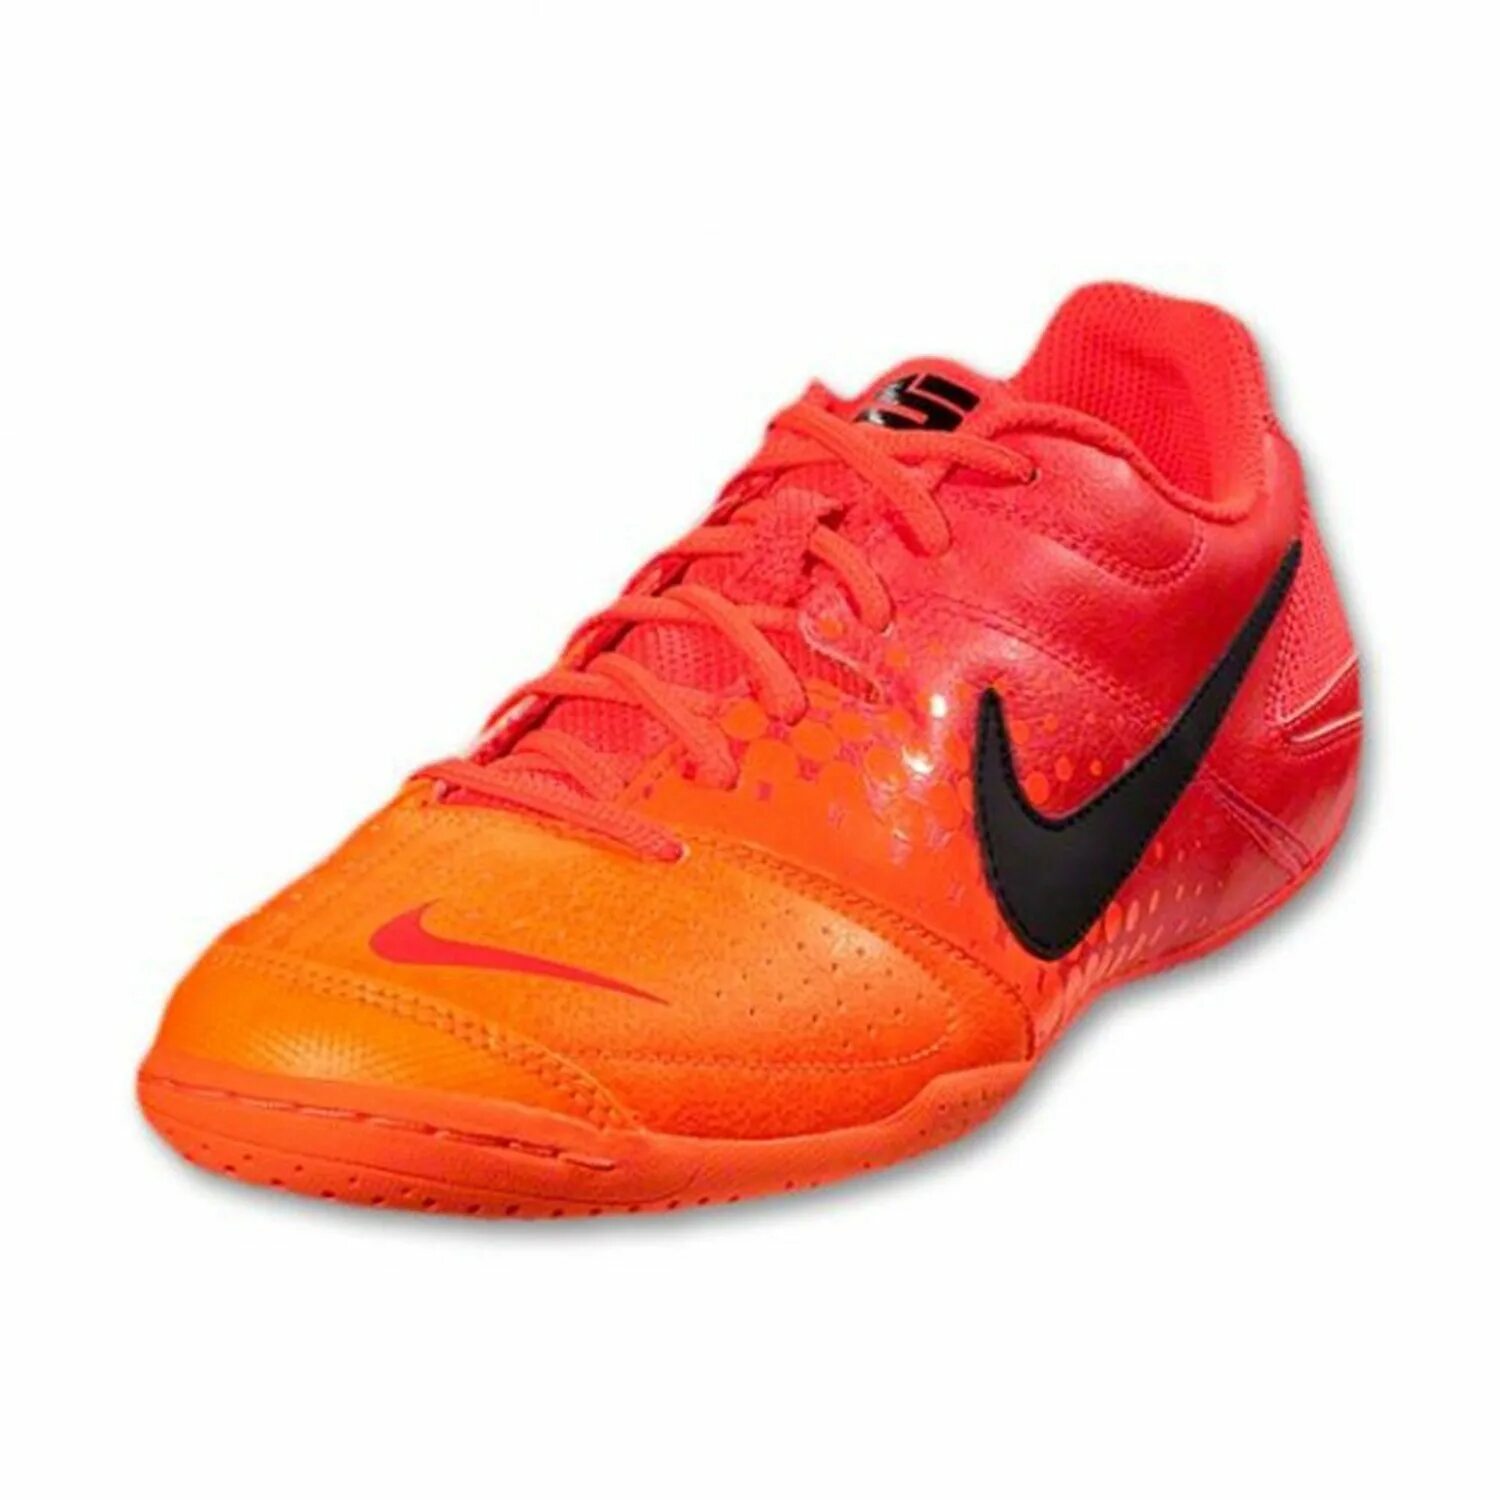 Сума го. Nike Five футзал. Nike футзалки бело оранжевые. Найк 5 Эластико футзалки. Оранжевые бутсы футзалки.